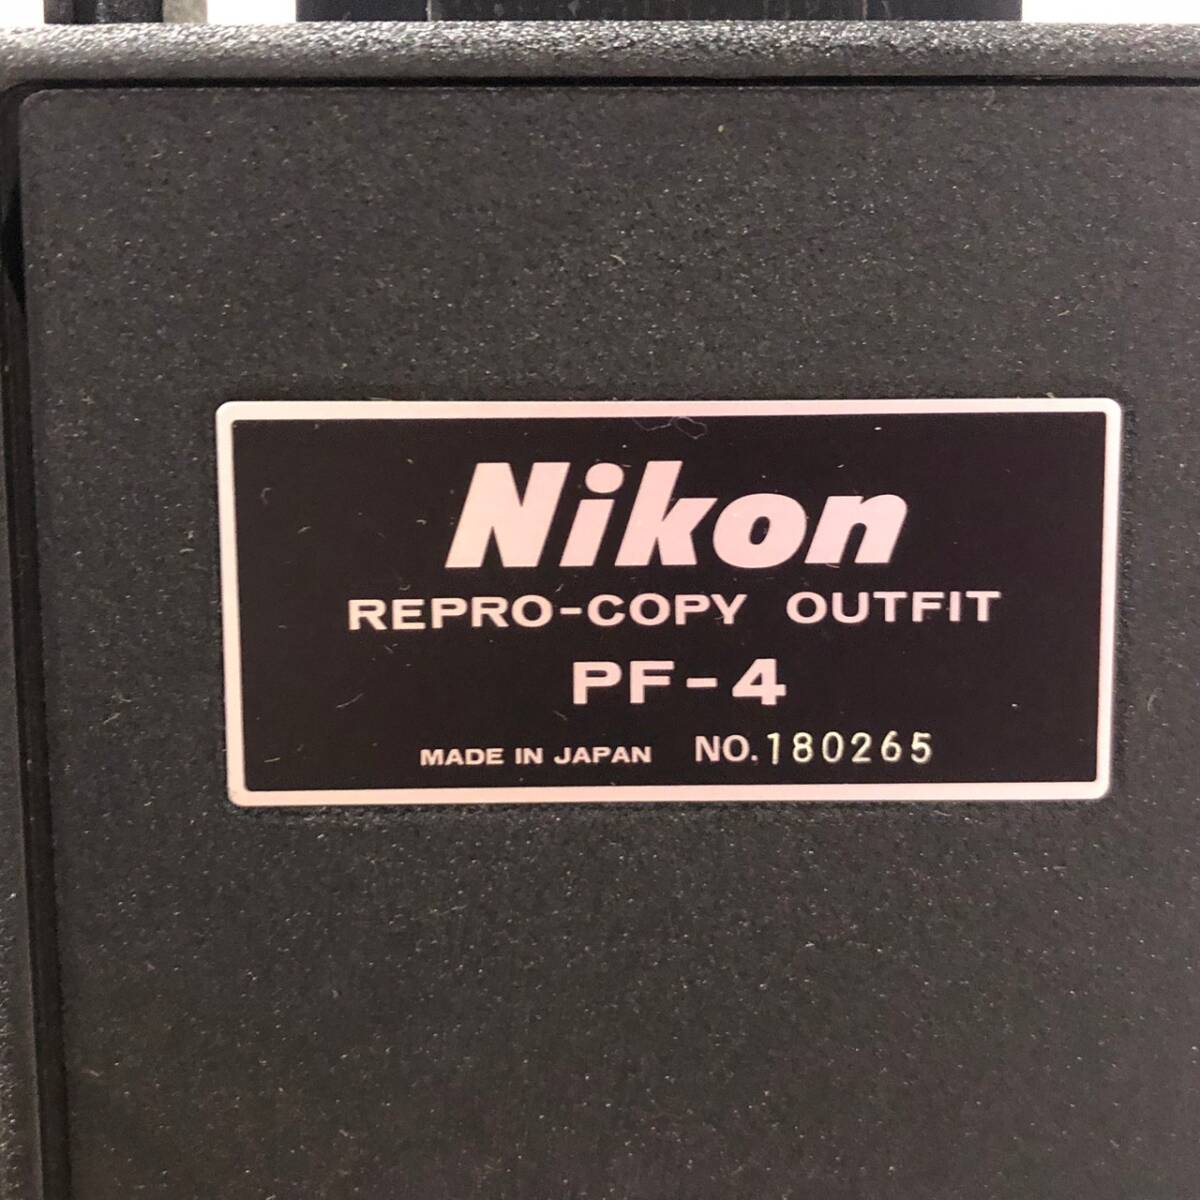 BDm129I 140x2 箱付き Nikon PF-4 REPRO COPY OUTFIT リプロ コピー アウトフィット スタンド 複写装置 撮影機材 レトロの画像8